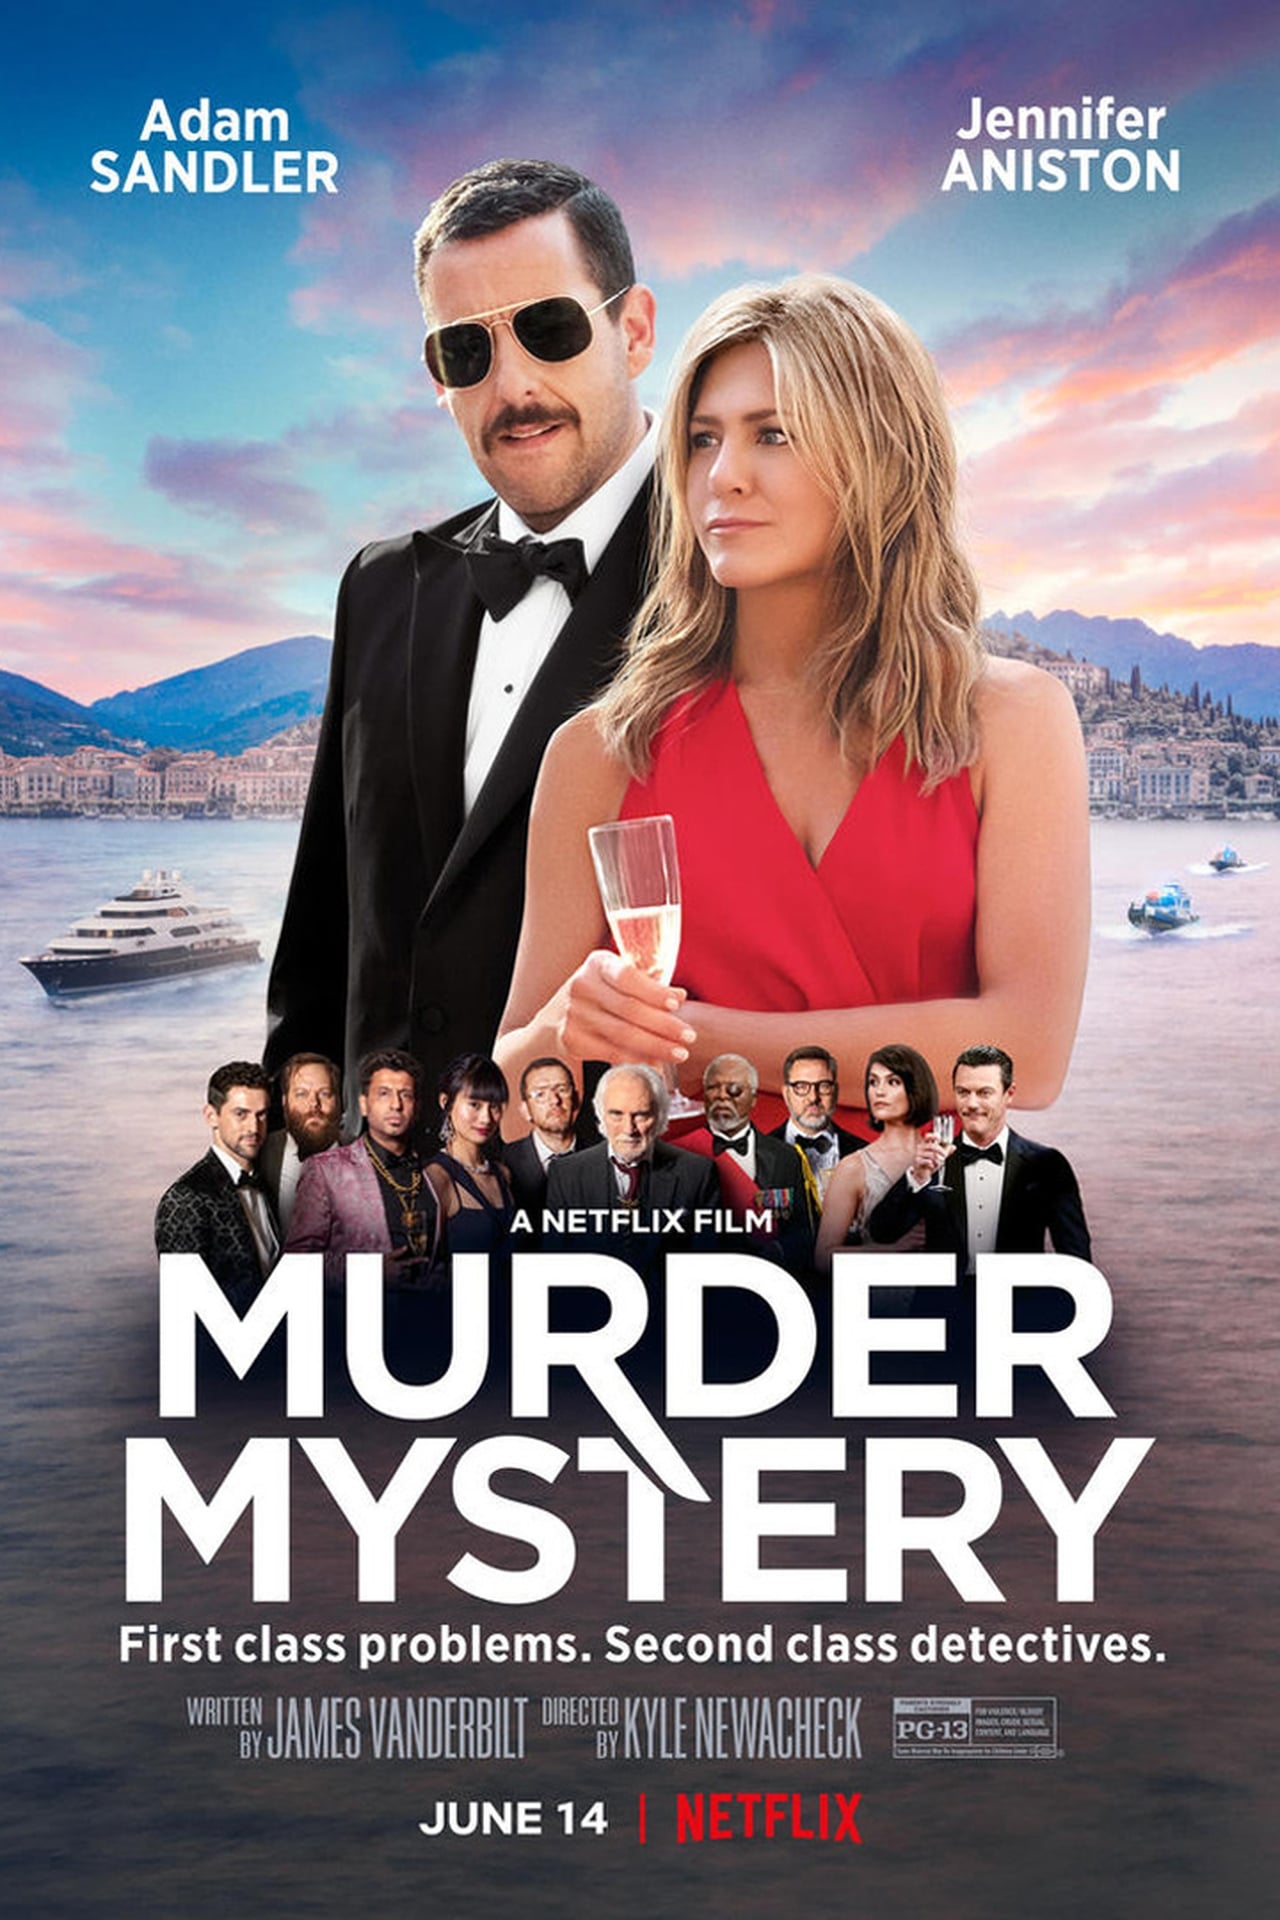 EN - Murder Mystery 1 (2019) - ADAM SANDLER